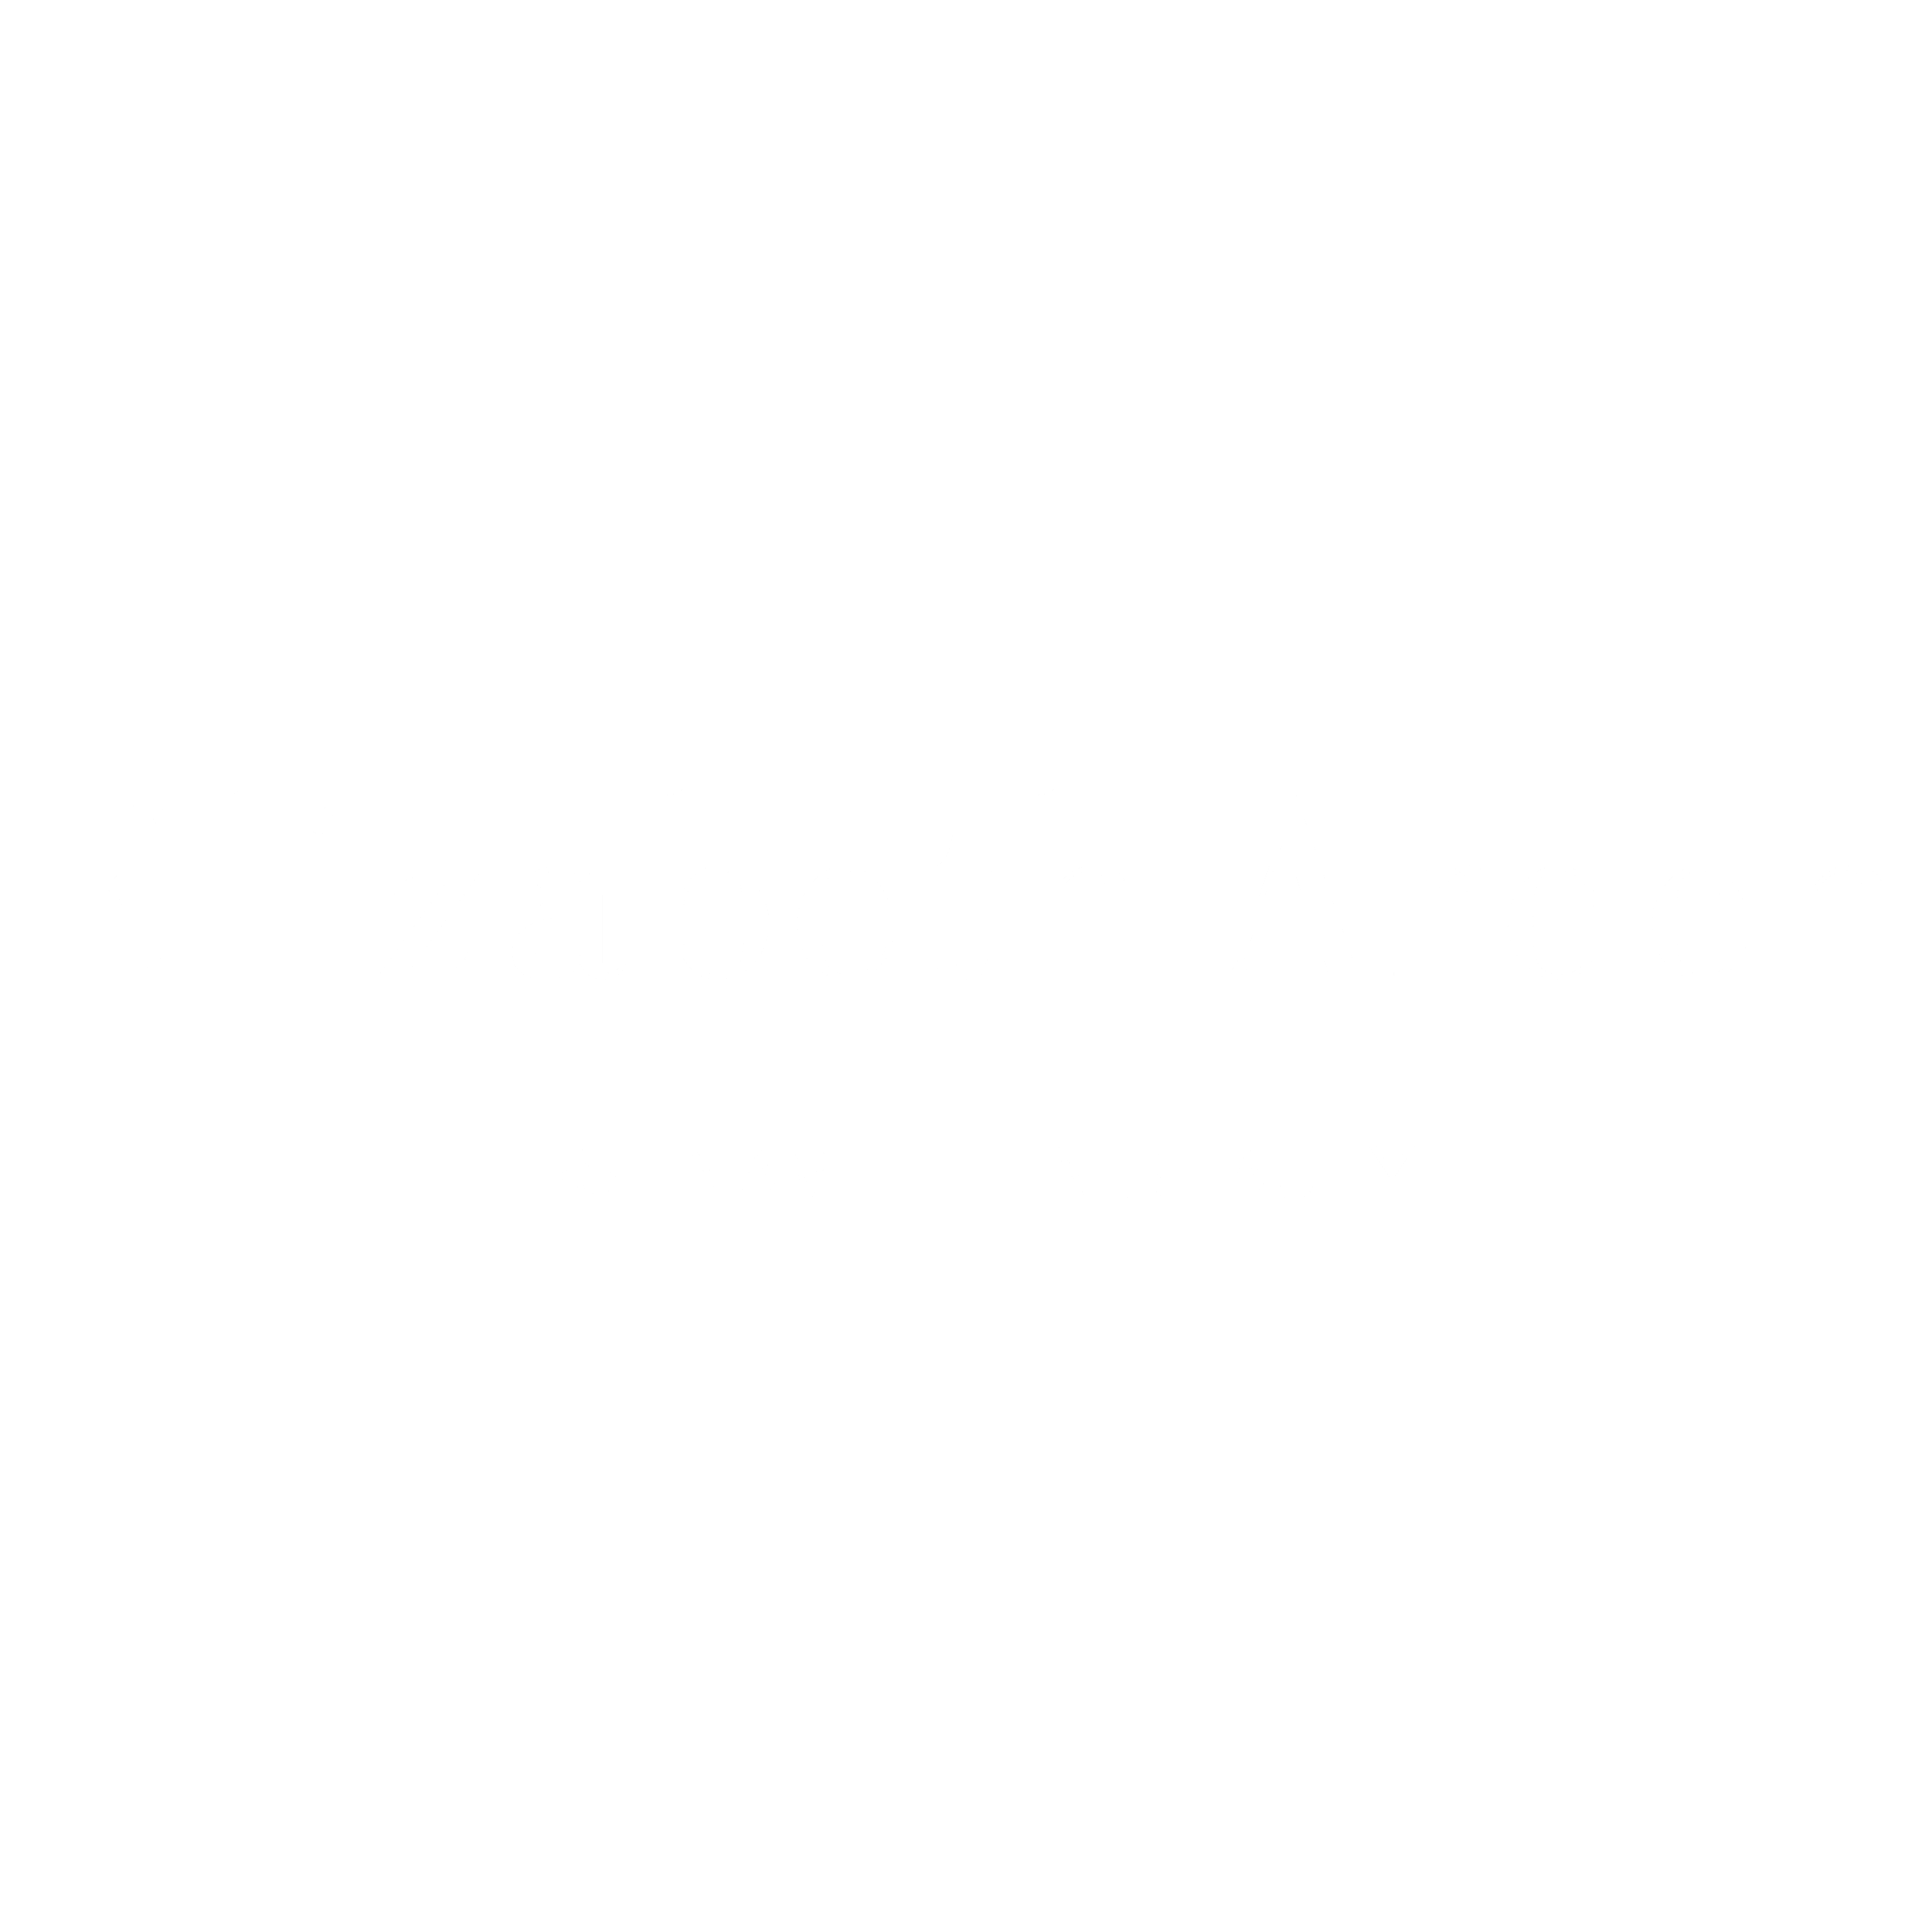 Elizabeth Arden Logo - Elizabeth Arden Logo PNG Transparent & SVG Vector